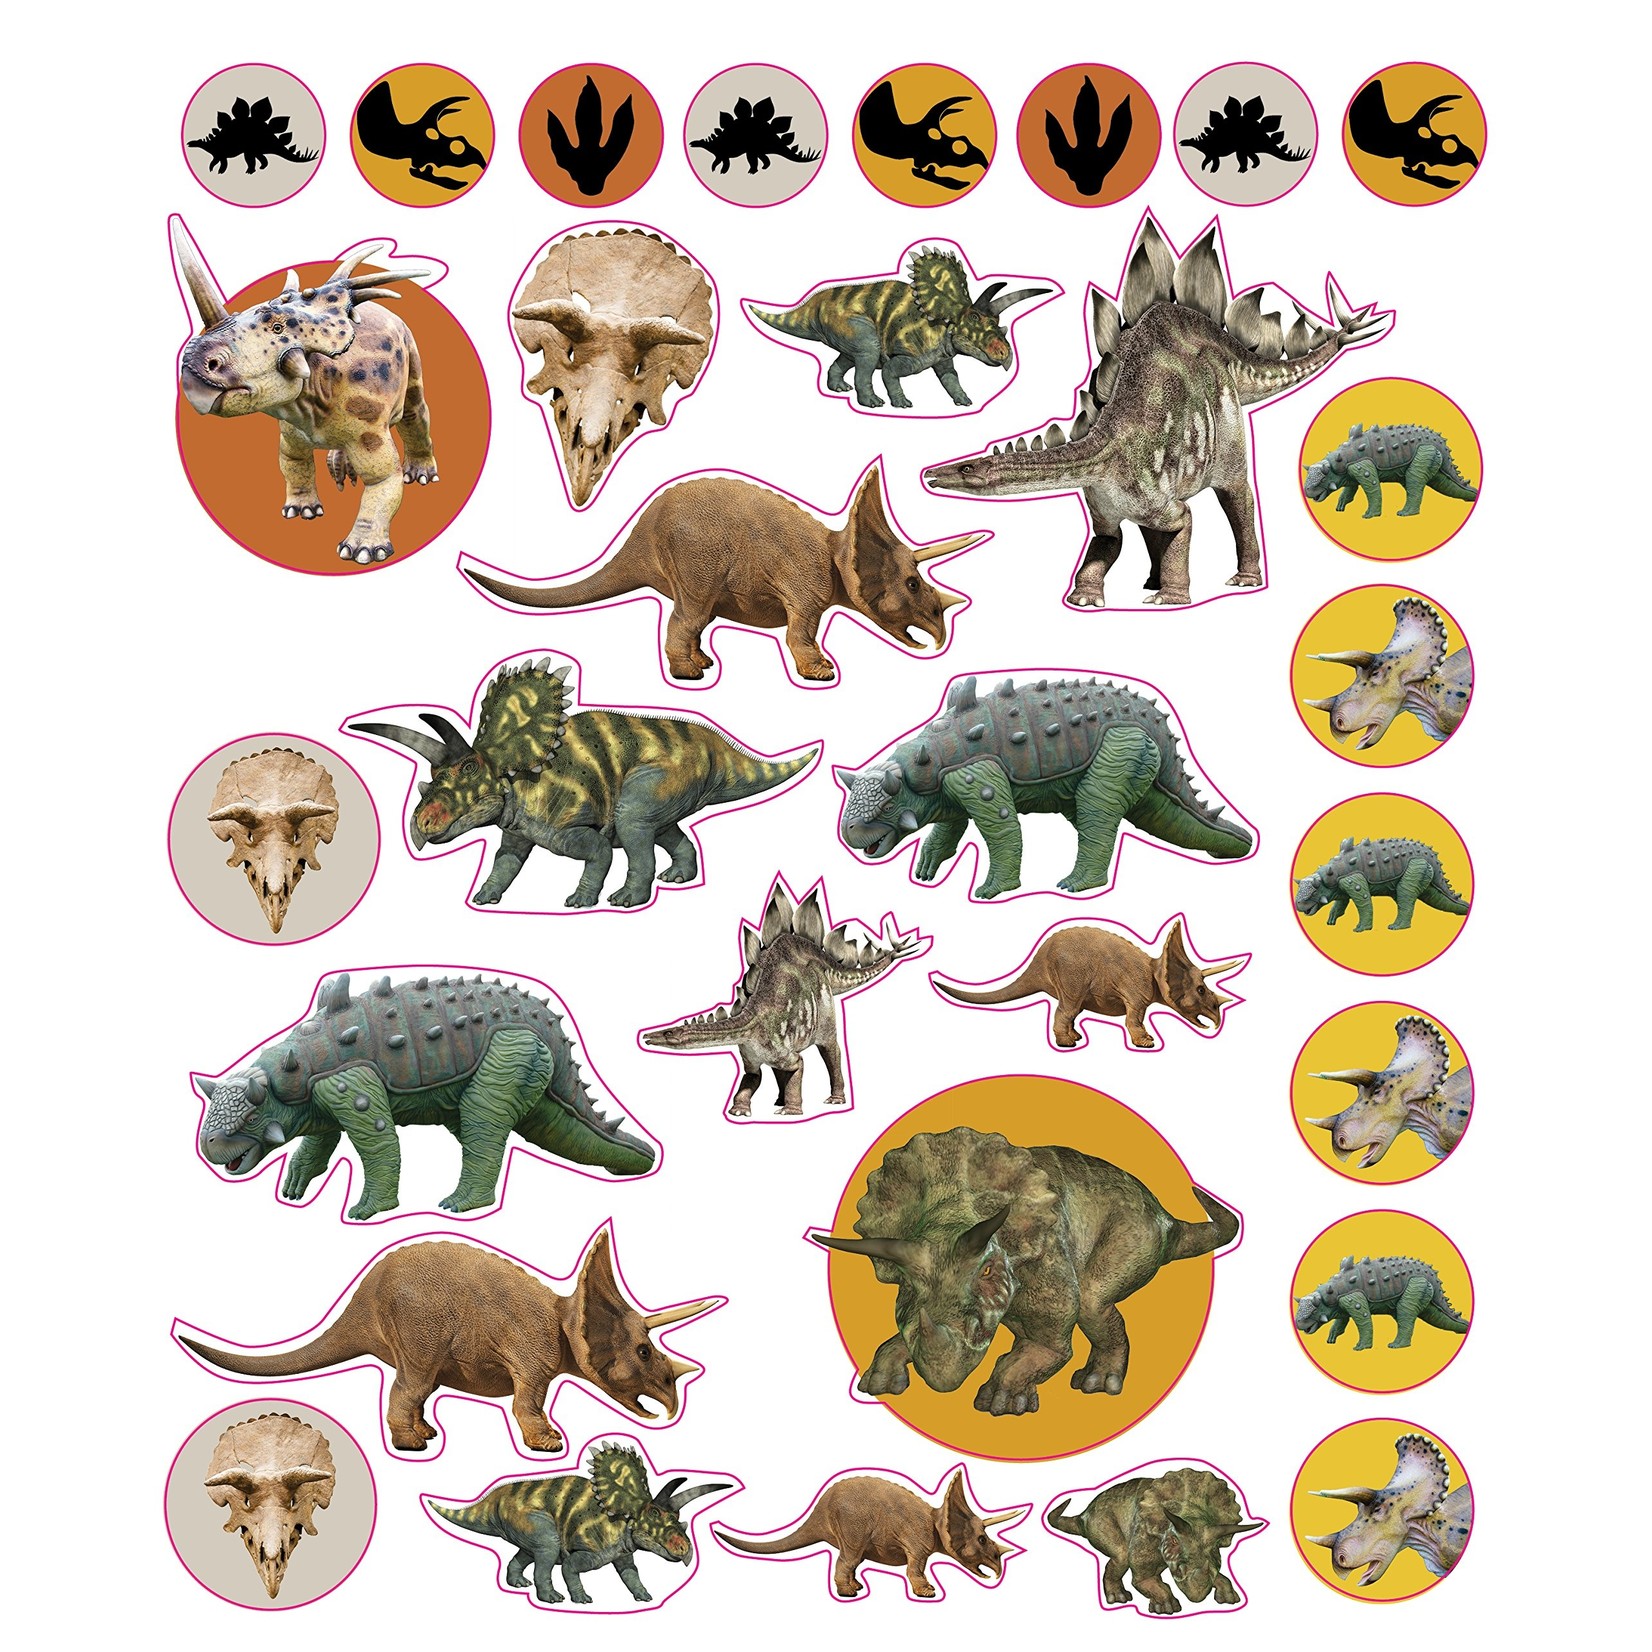 Dinosaurs Reusable Stickers